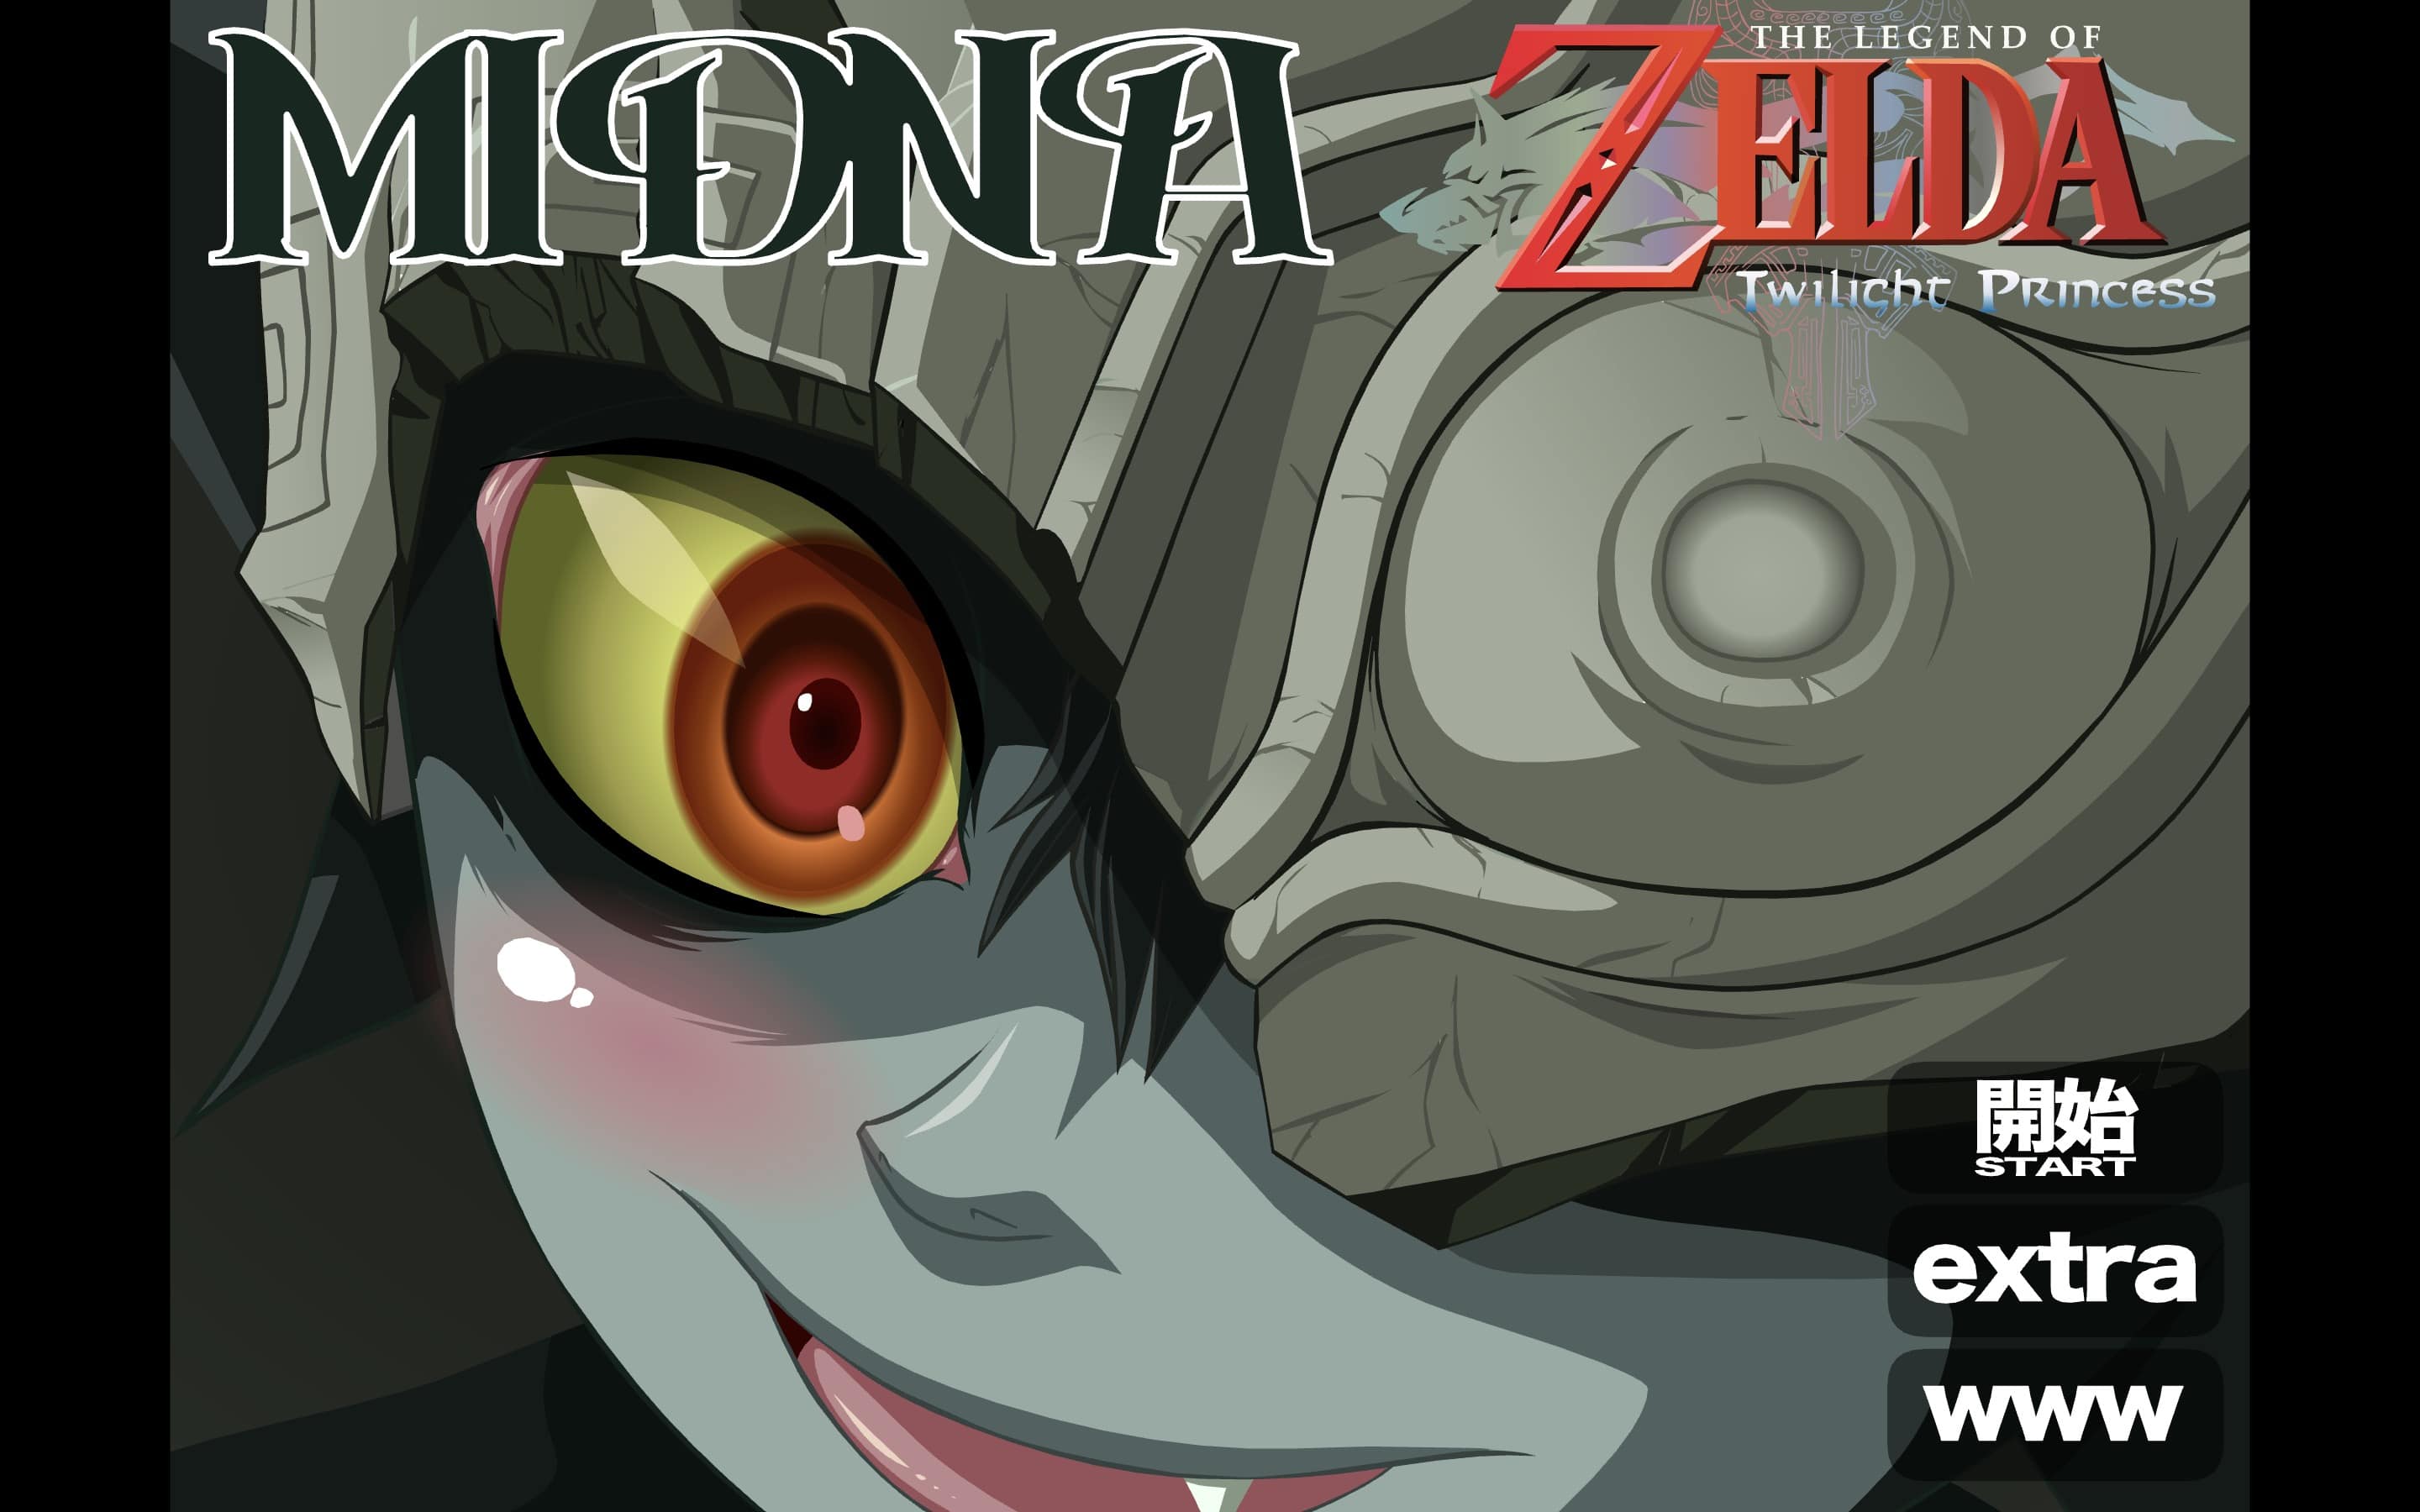 Midna: The Legend Of Zelda Twilight Princess